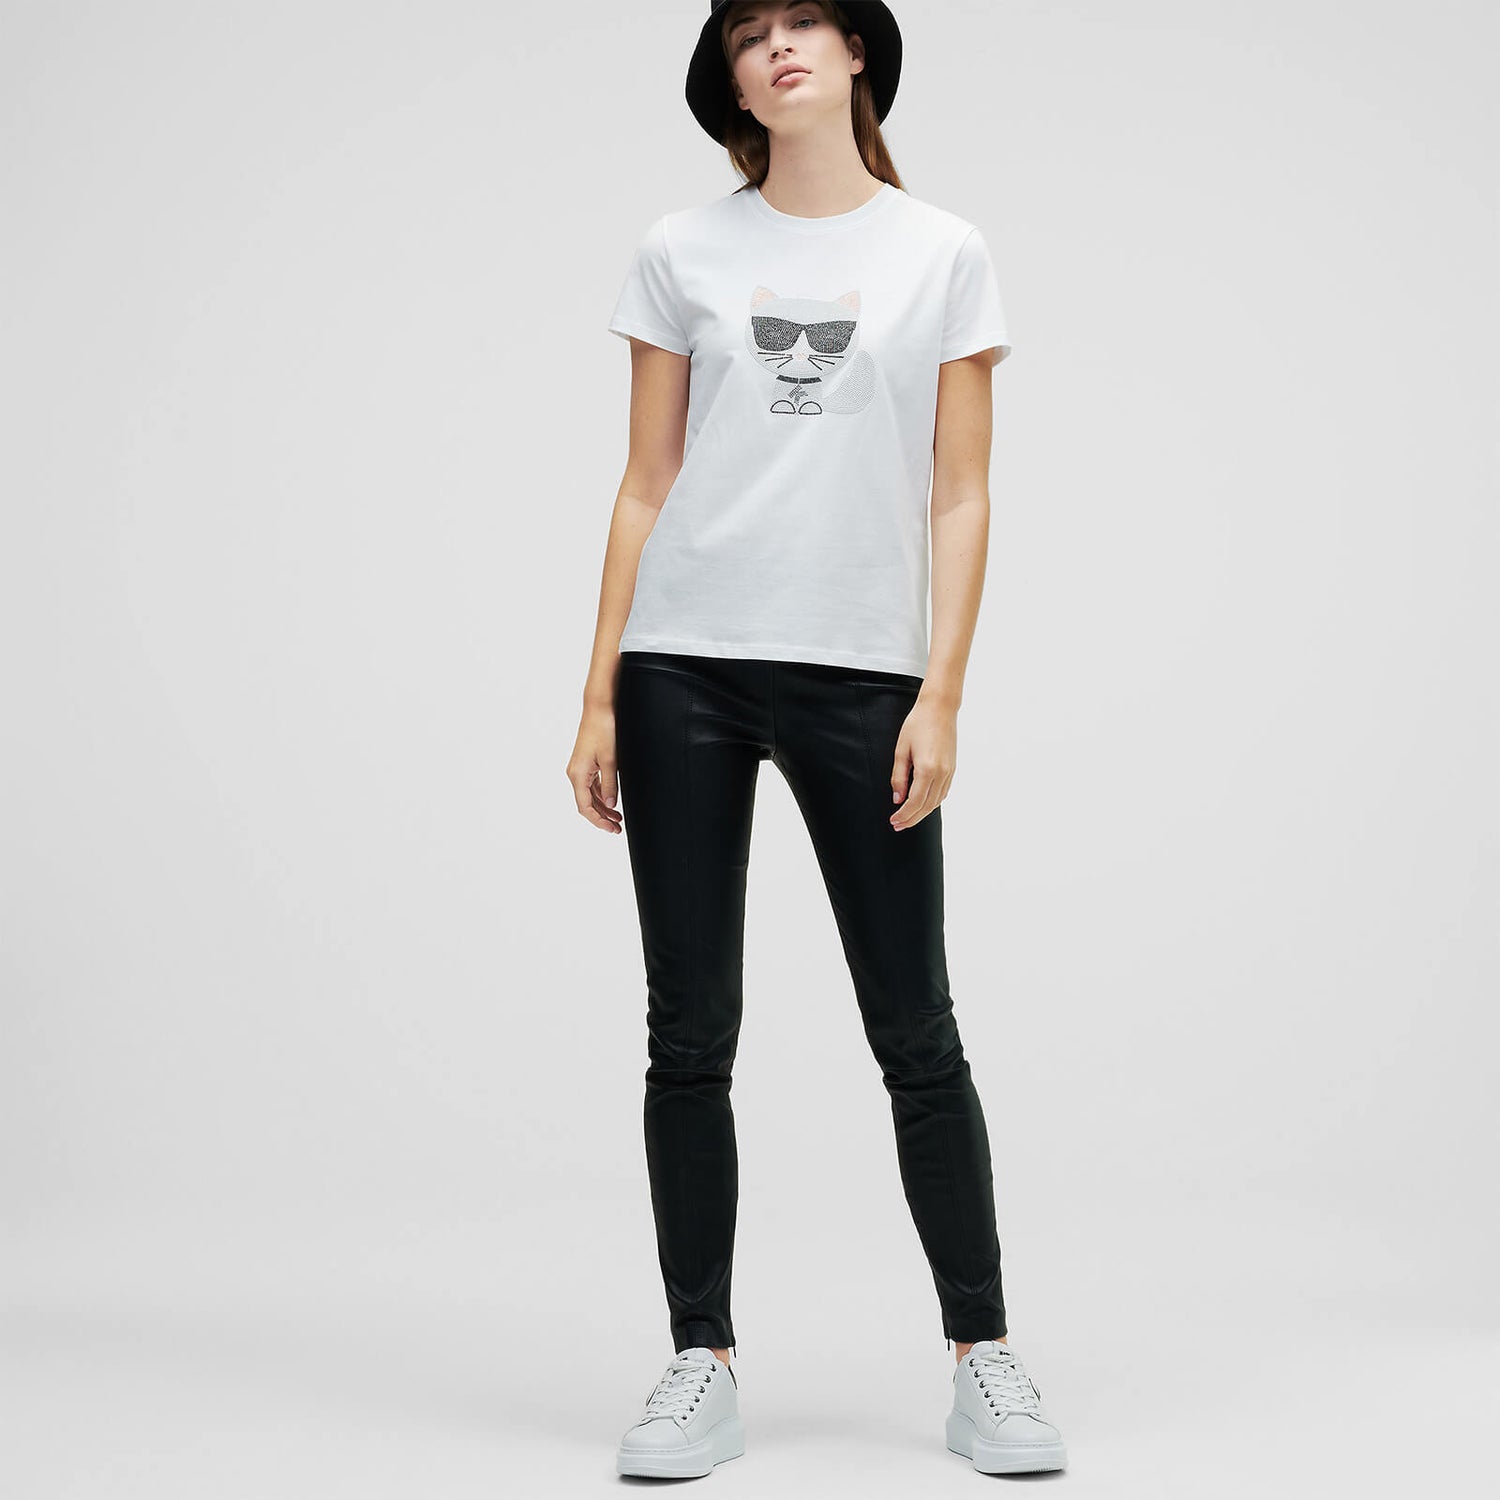 KARL LAGERFELD Women's Ikonik Choupette T-Shirt - White - S